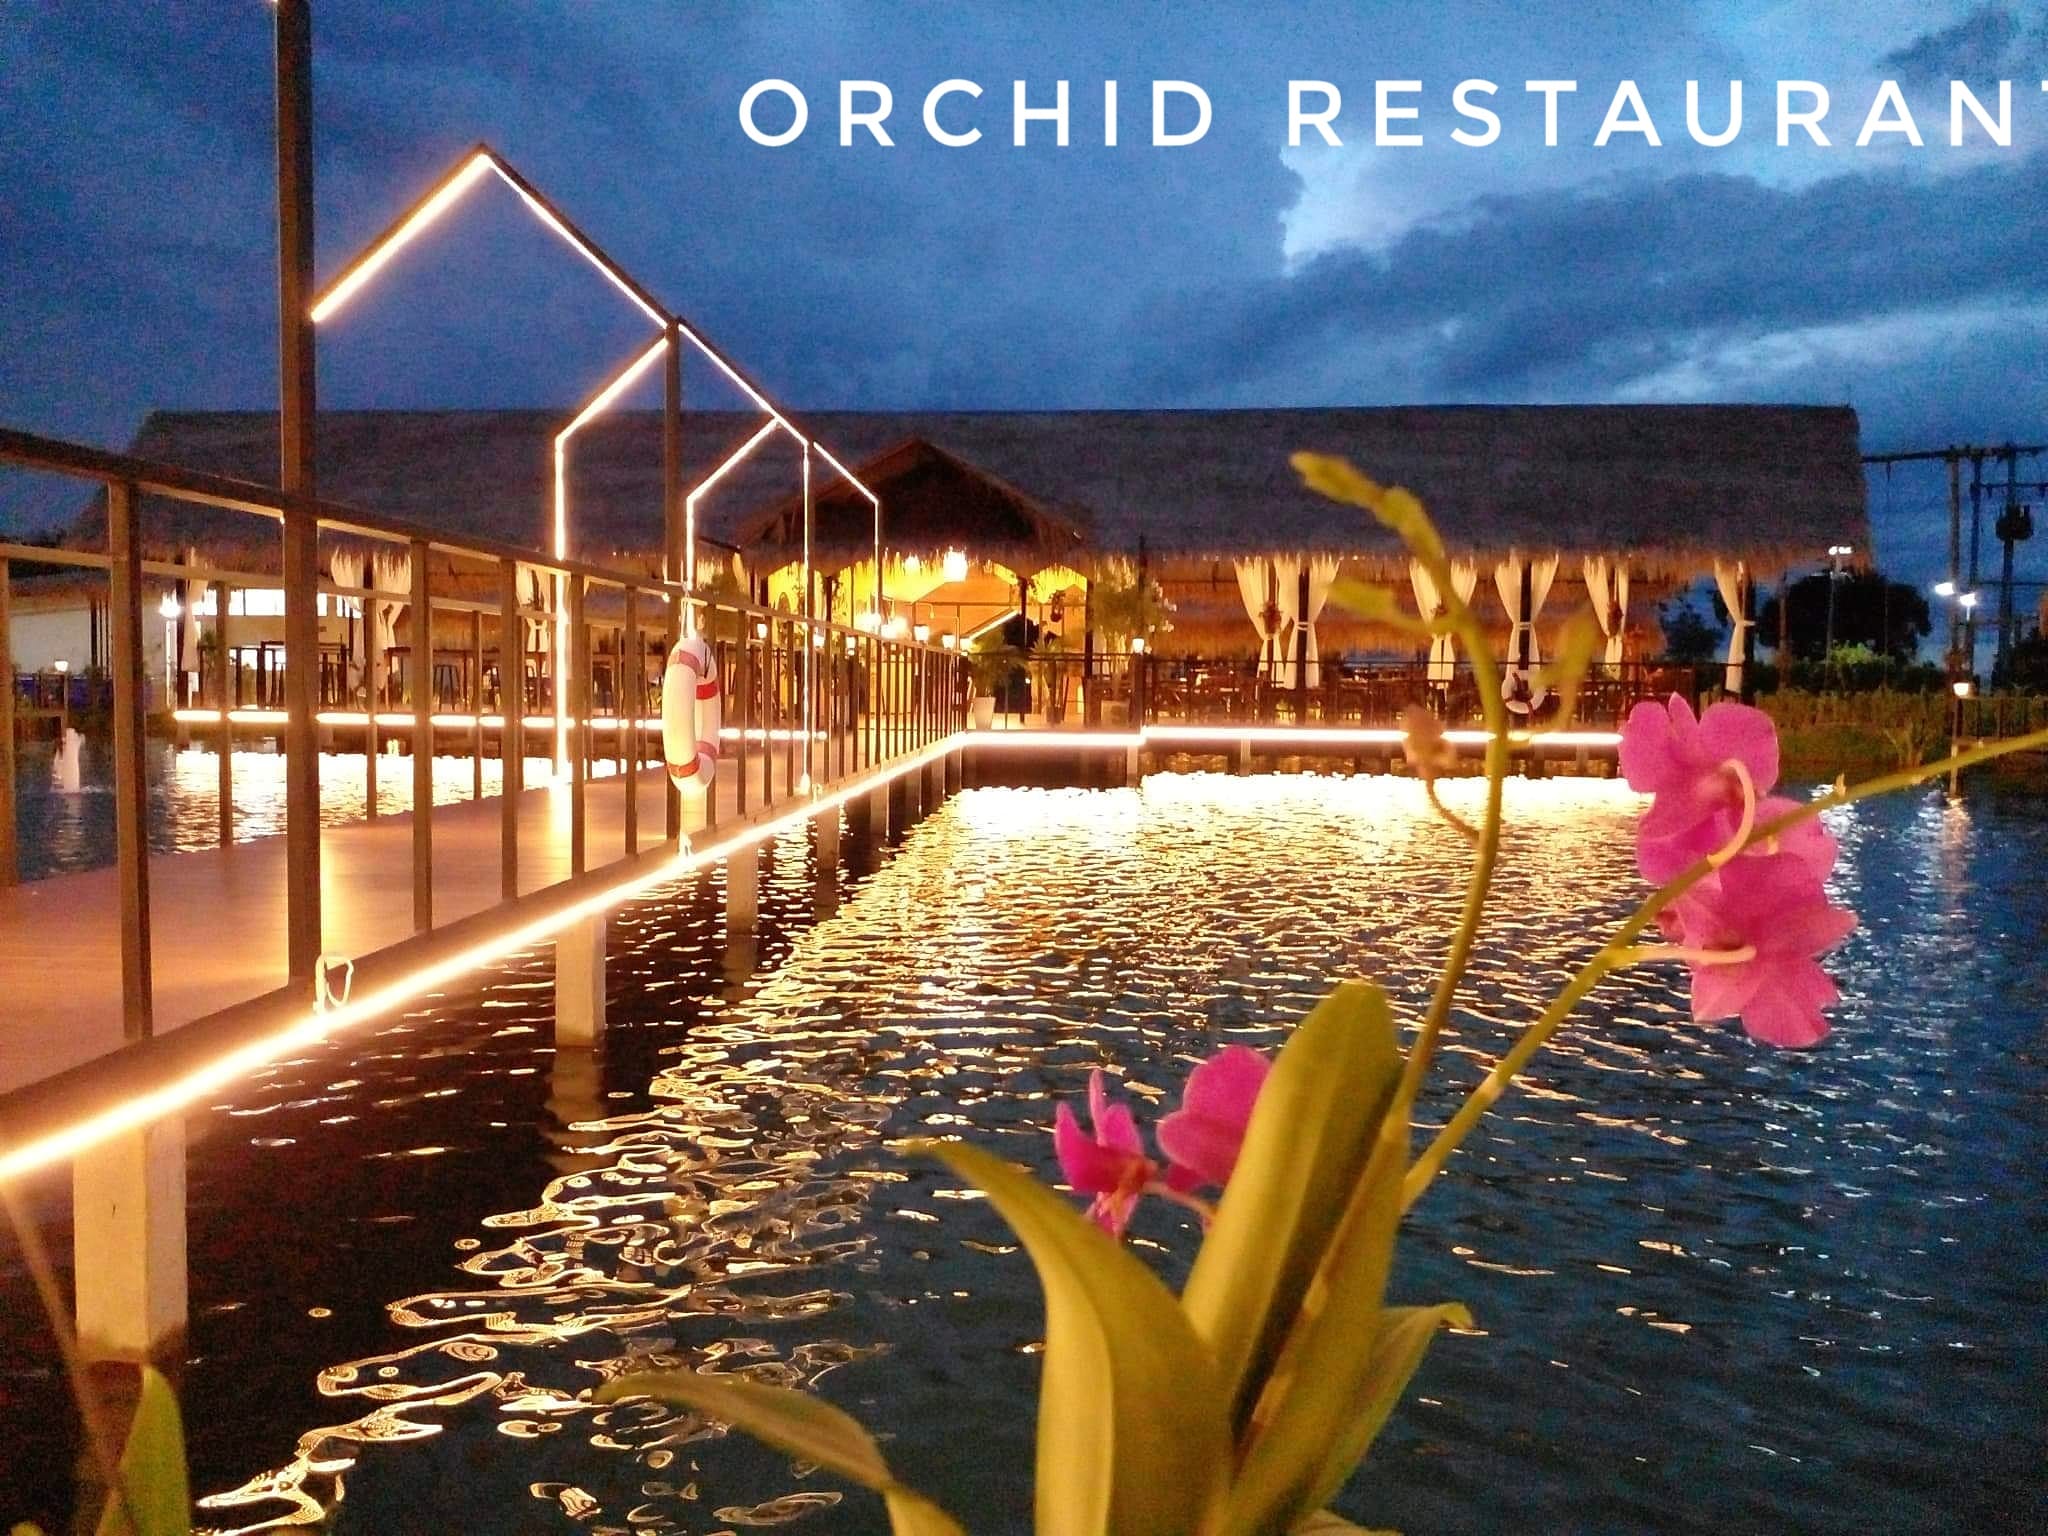 Orchid Restaurant Buriram (ออคิด Restaurant Buriram) : Buri Ram (บุรีรัมย์)